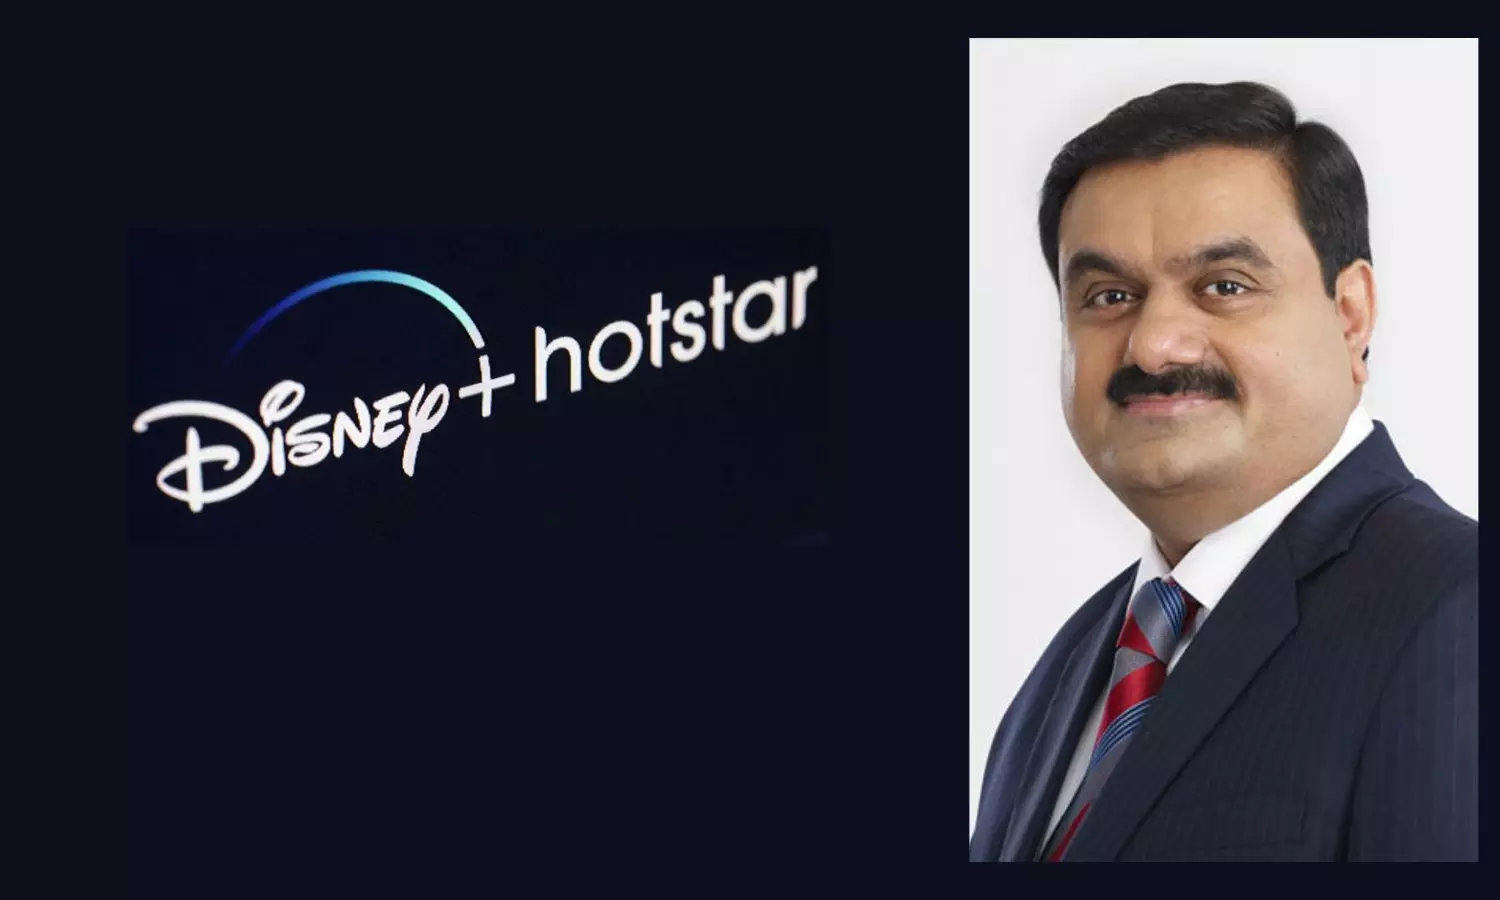 Disney + Hotstar business to Adani